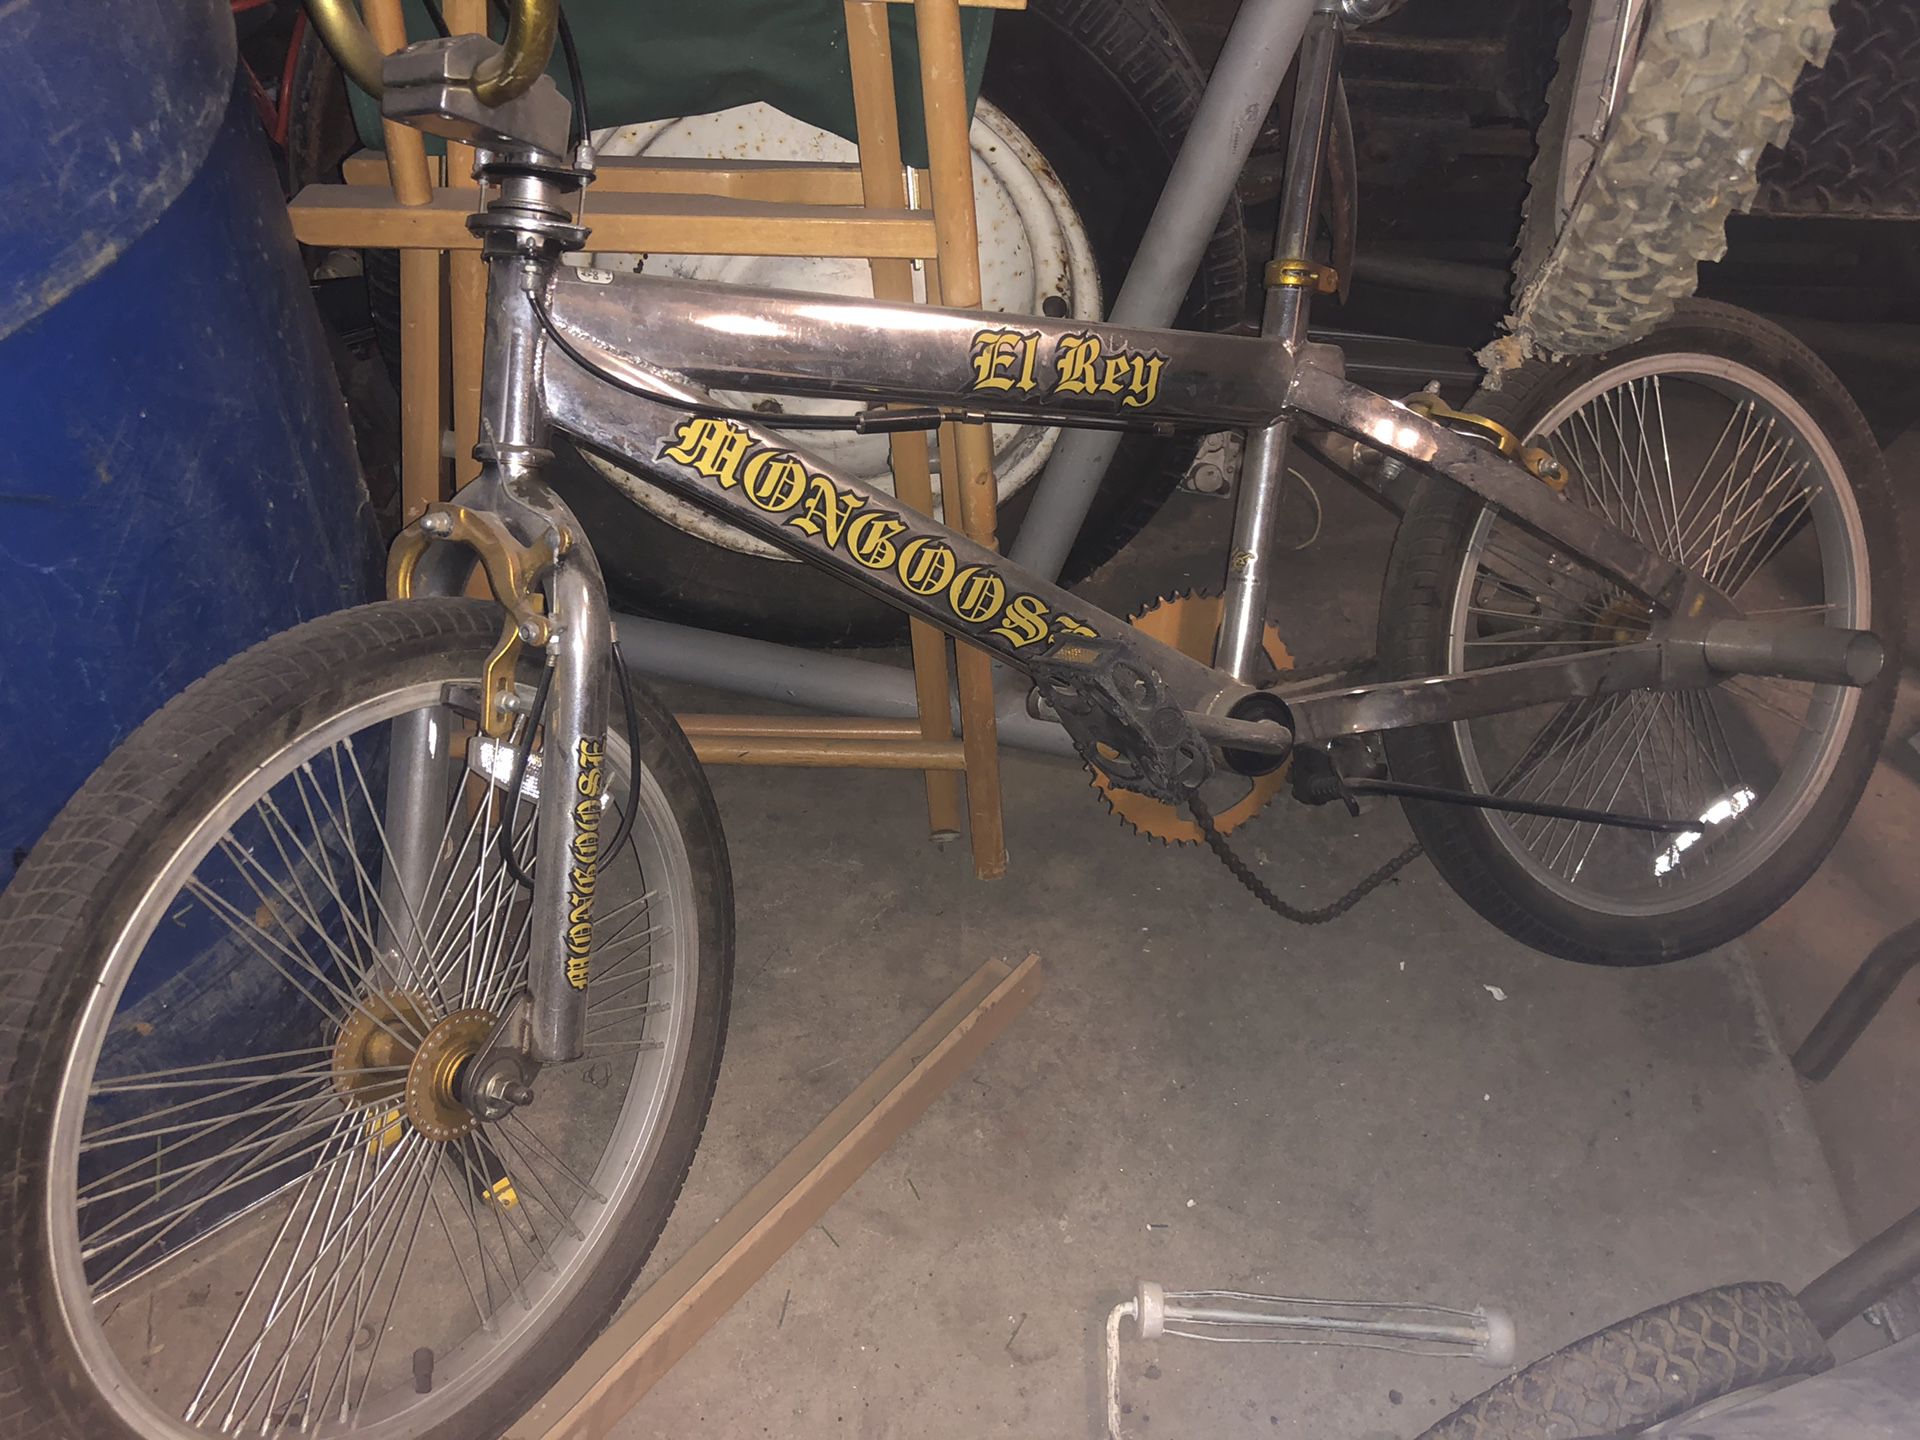 Mongoose “El Rey” BMX Bike